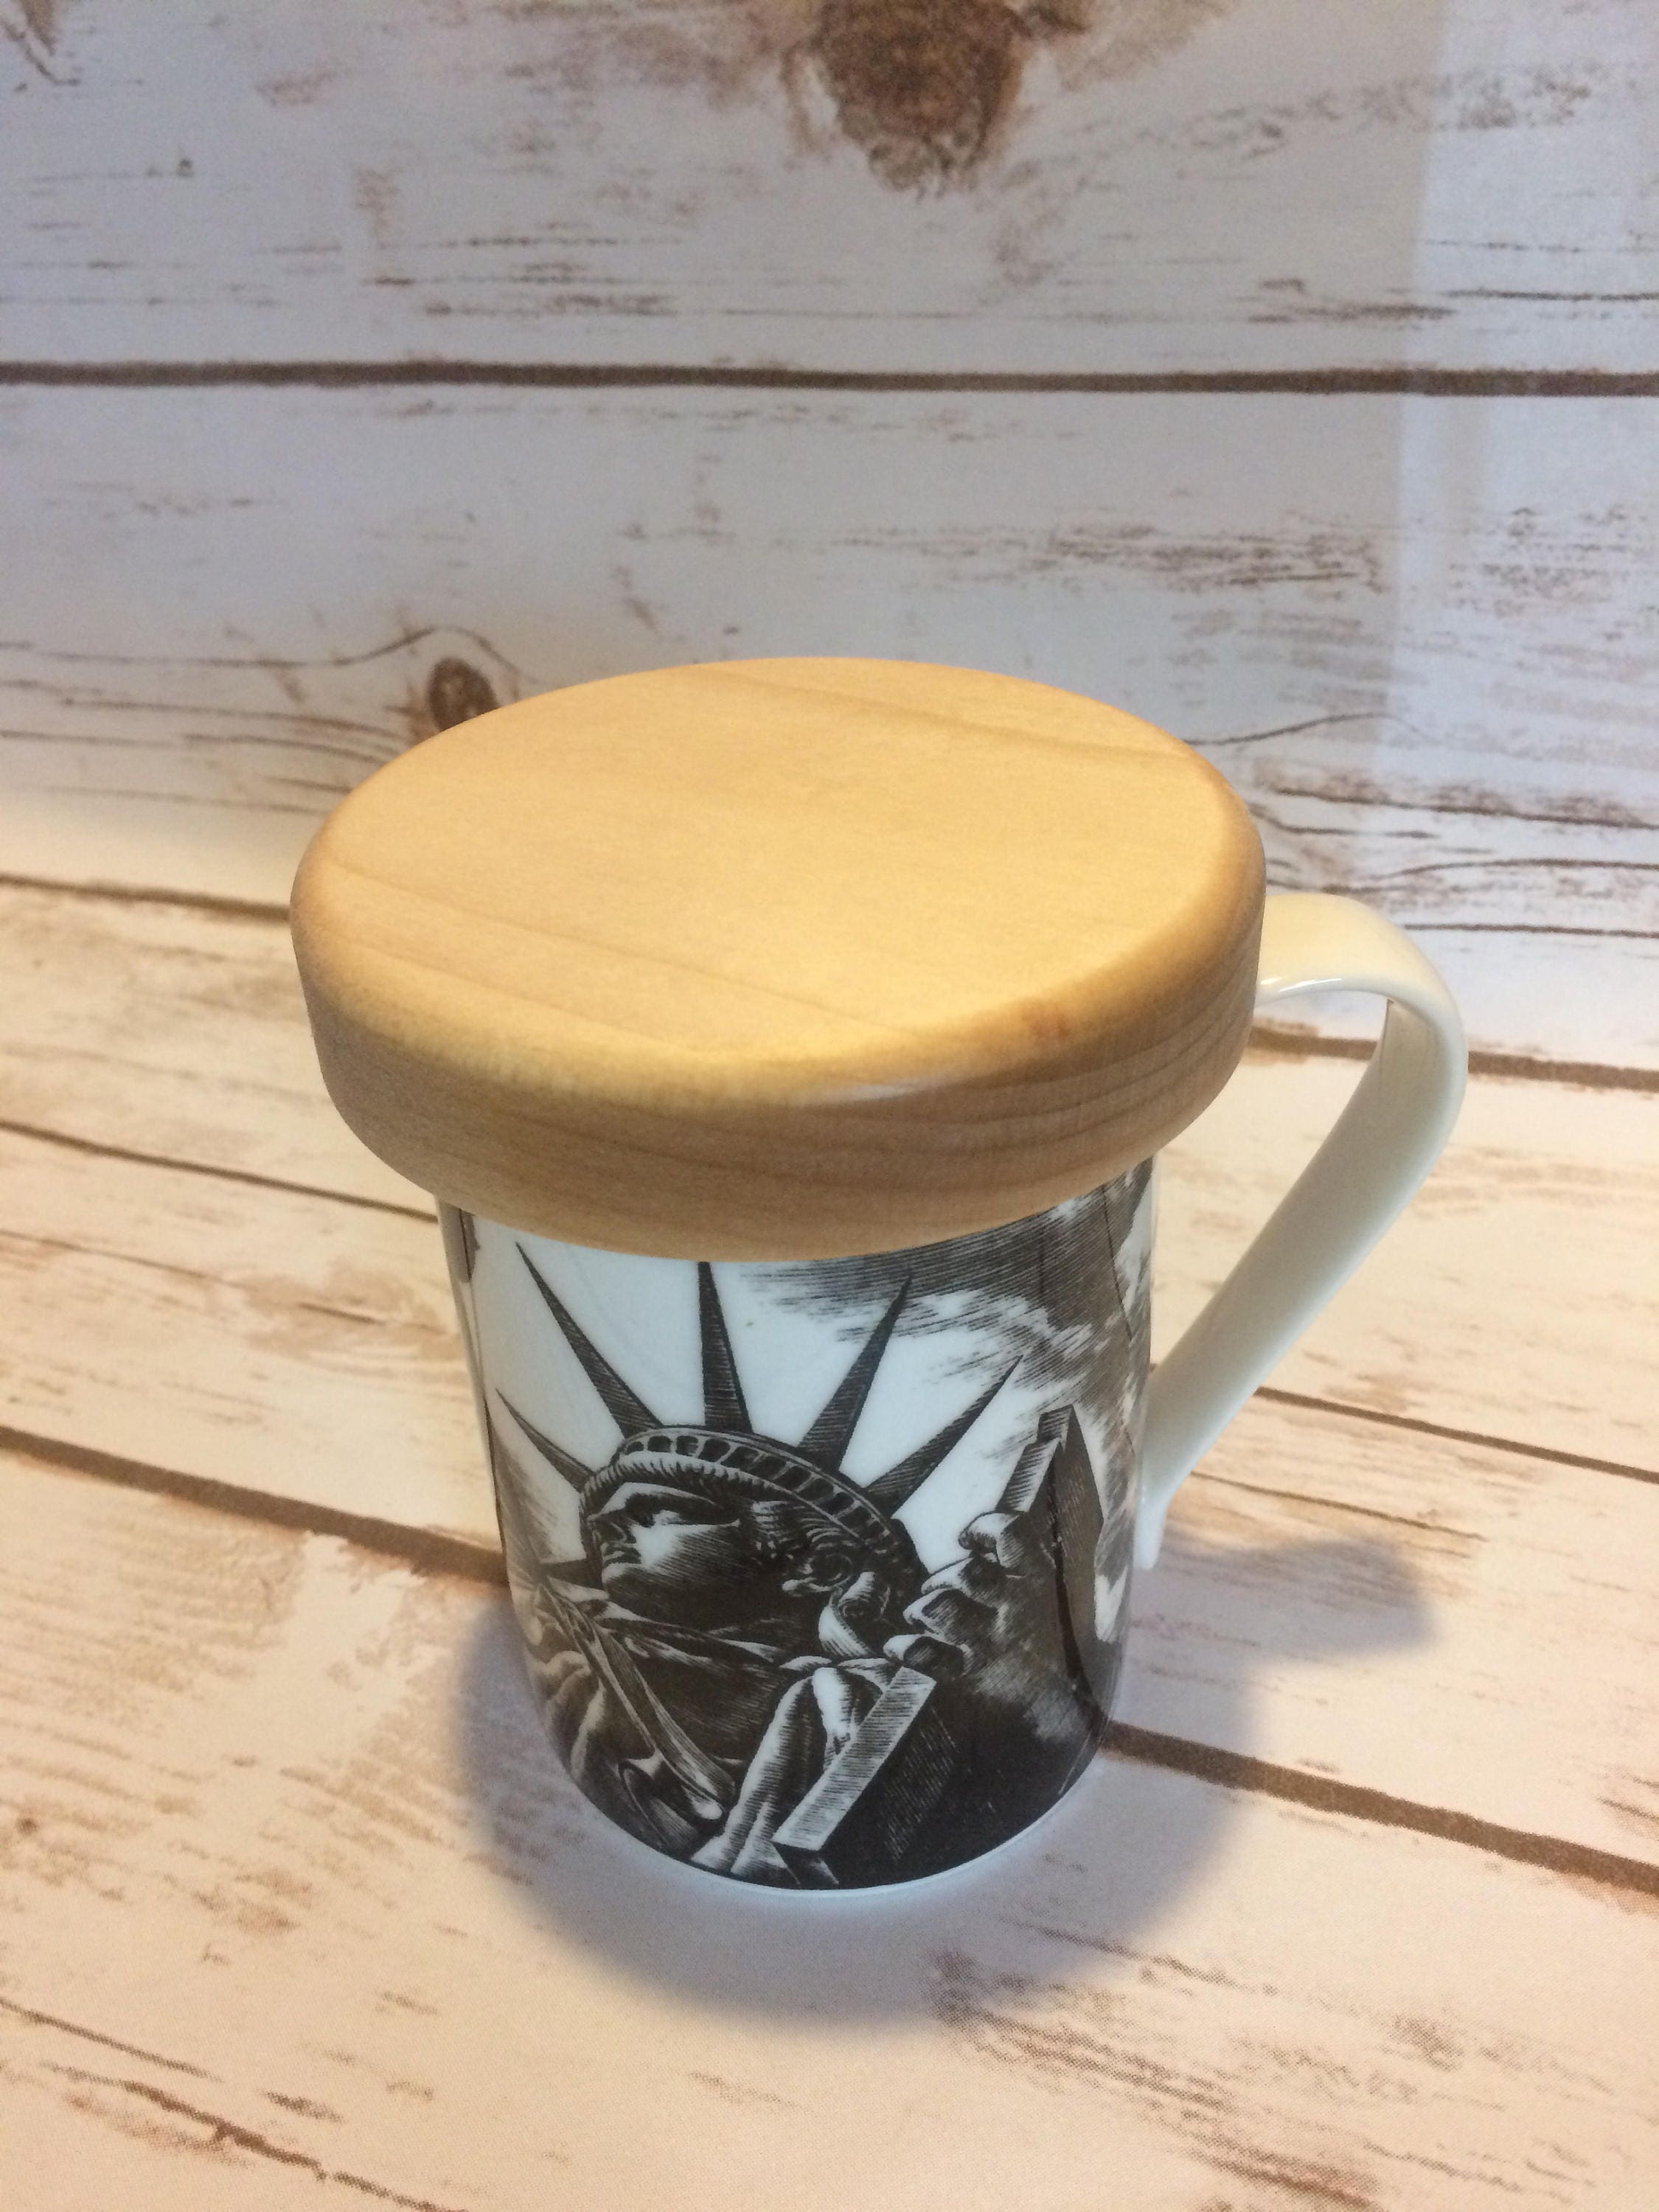 Ceramic Coffee Mug w/Lid and Cork Coaster Base - 12oz Slideproof Coffee  Cups w/Handle and Sip and Co…See more Ceramic Coffee Mug w/Lid and Cork